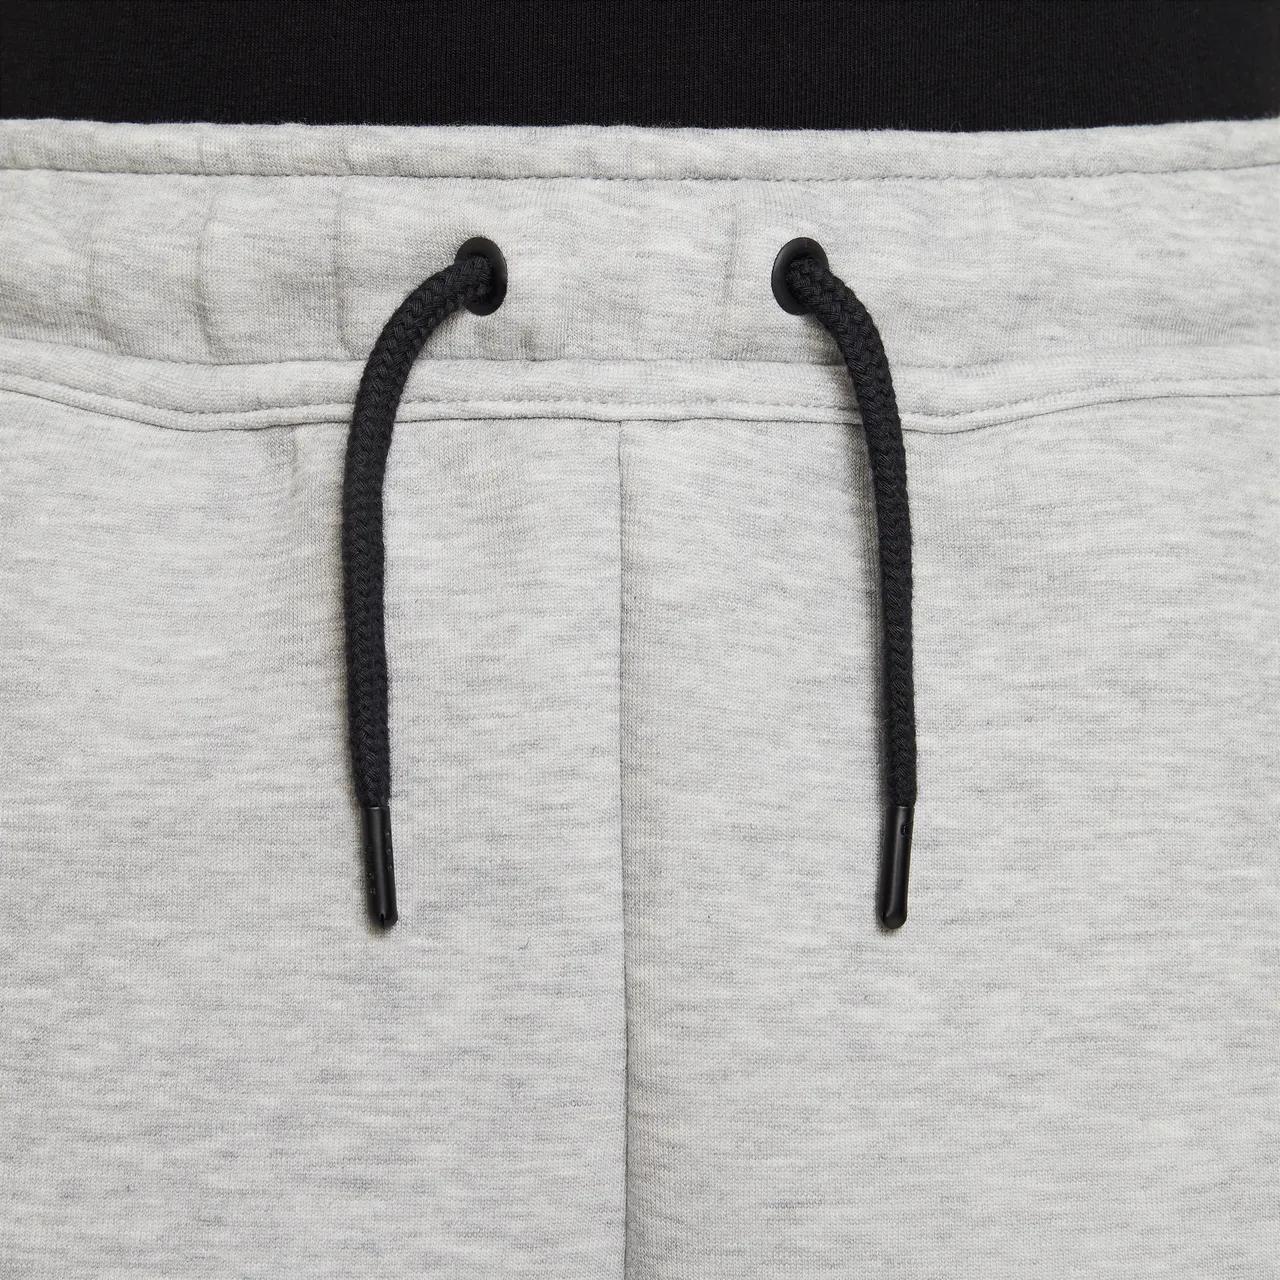 Nike Tech Fleece Older Kids' (Boys') Shorts - Grey - Cotton